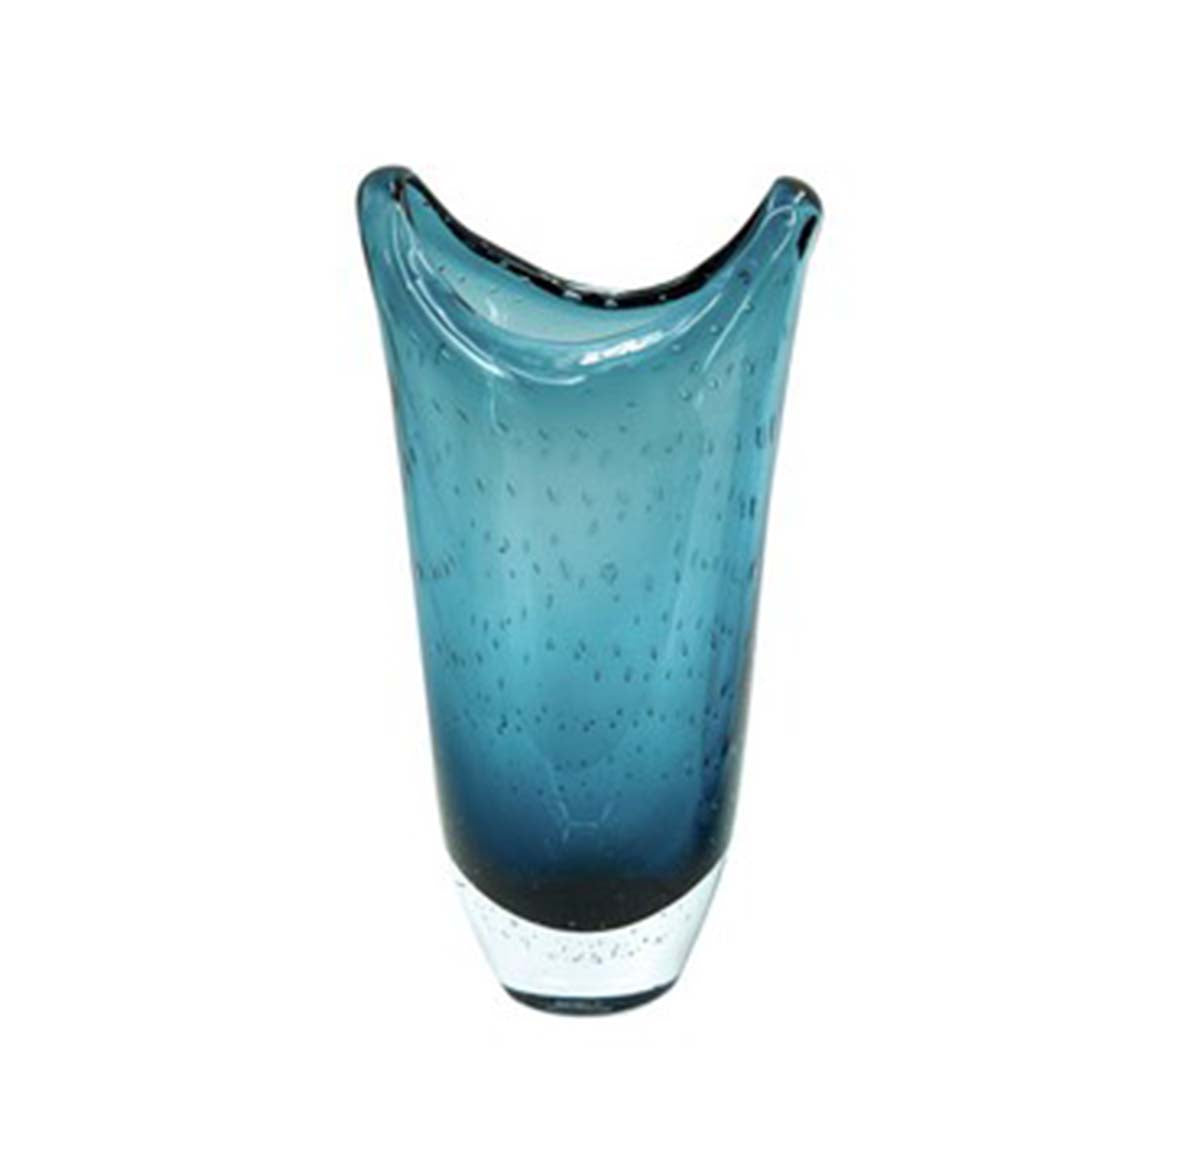 Belling Glass Tall Vase - blue - large | Vases & Urns | Home Decor